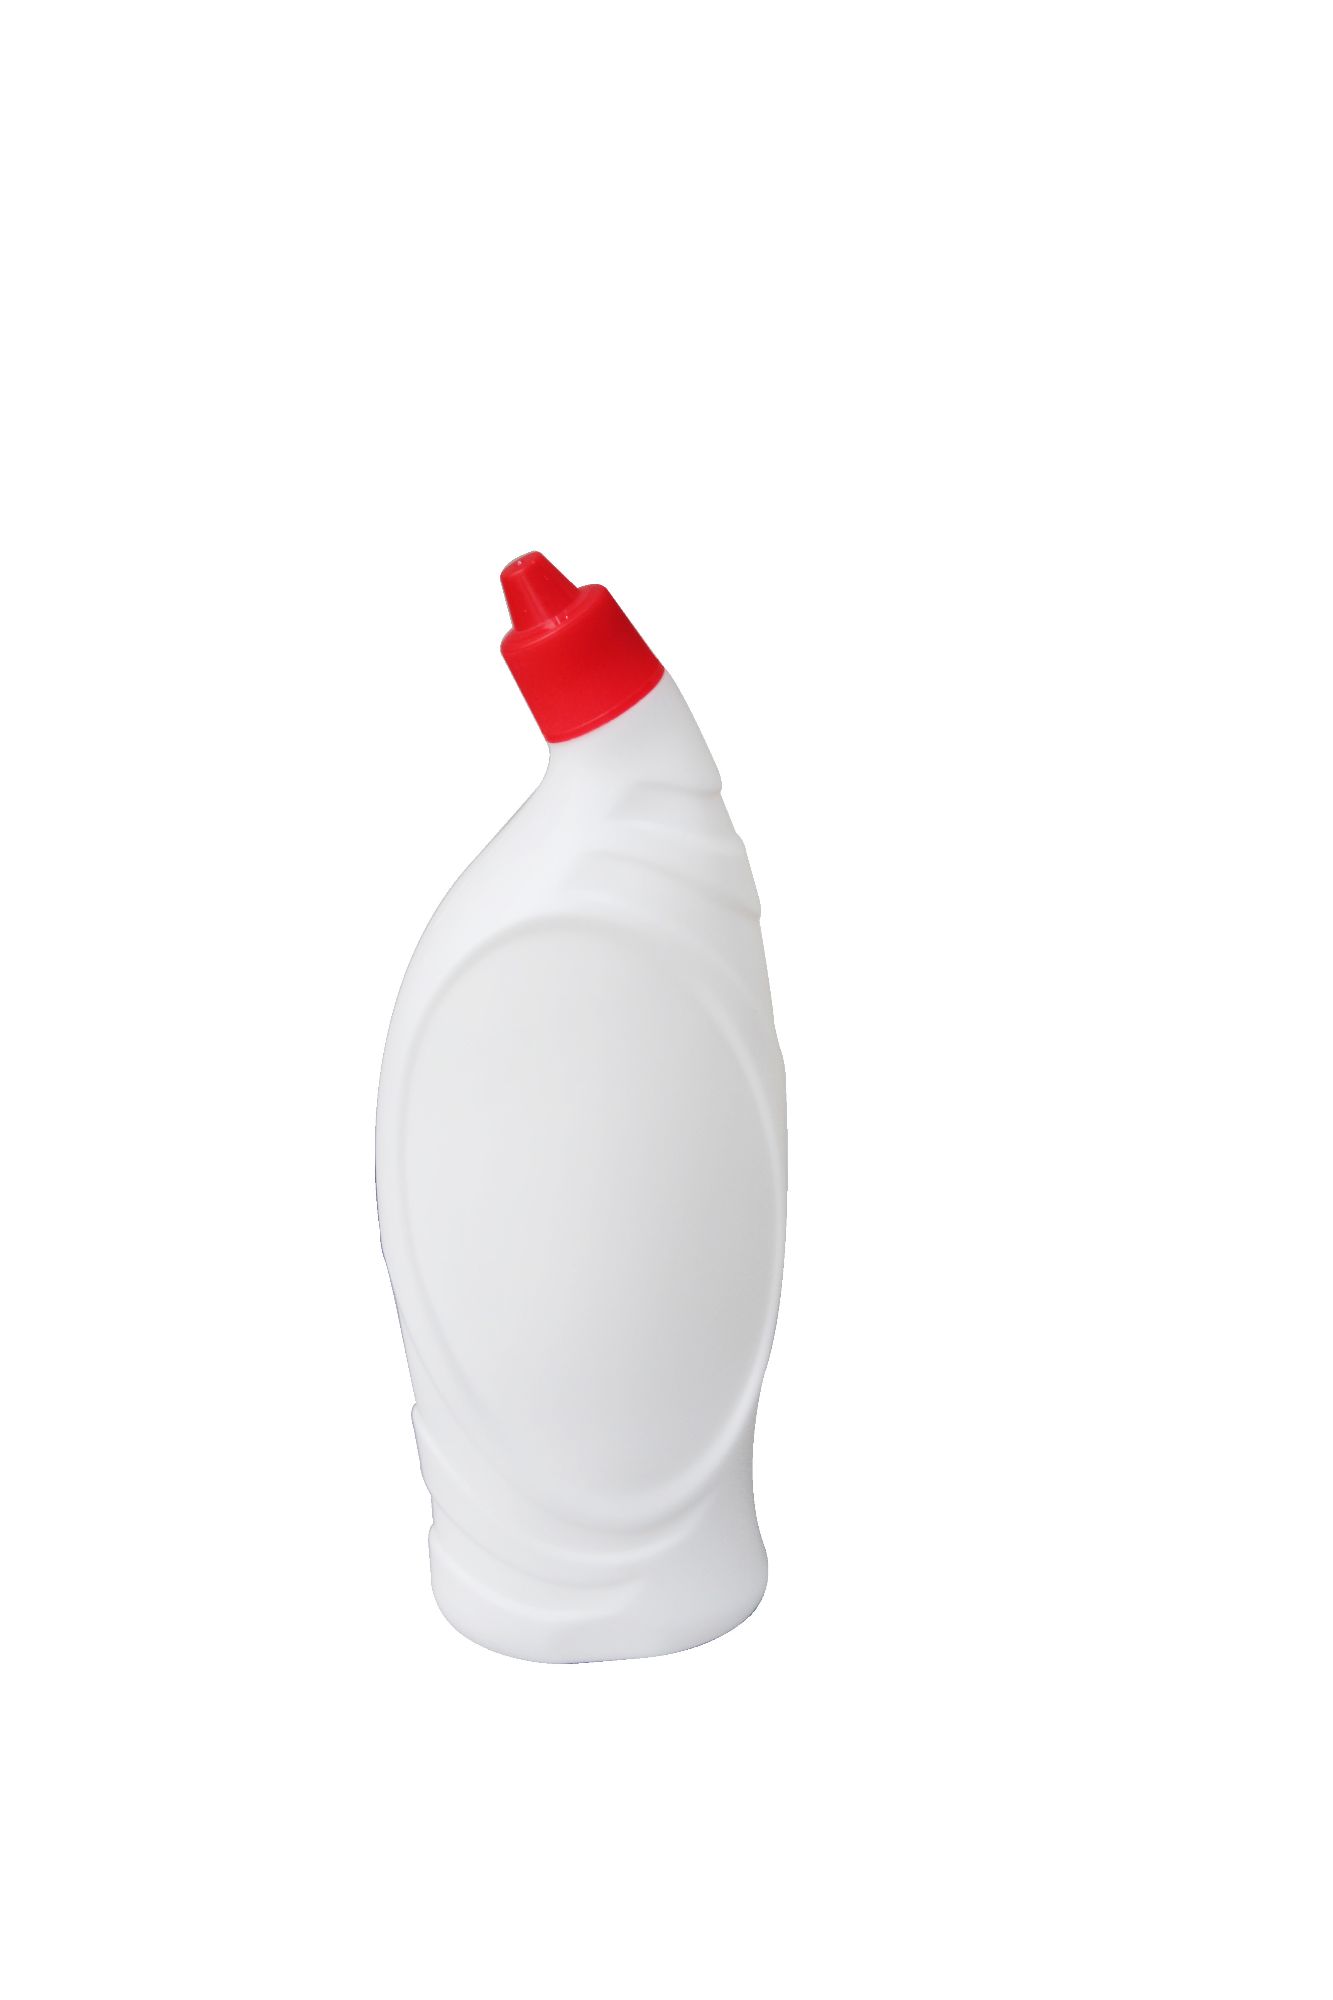 84 disinfectant bottle